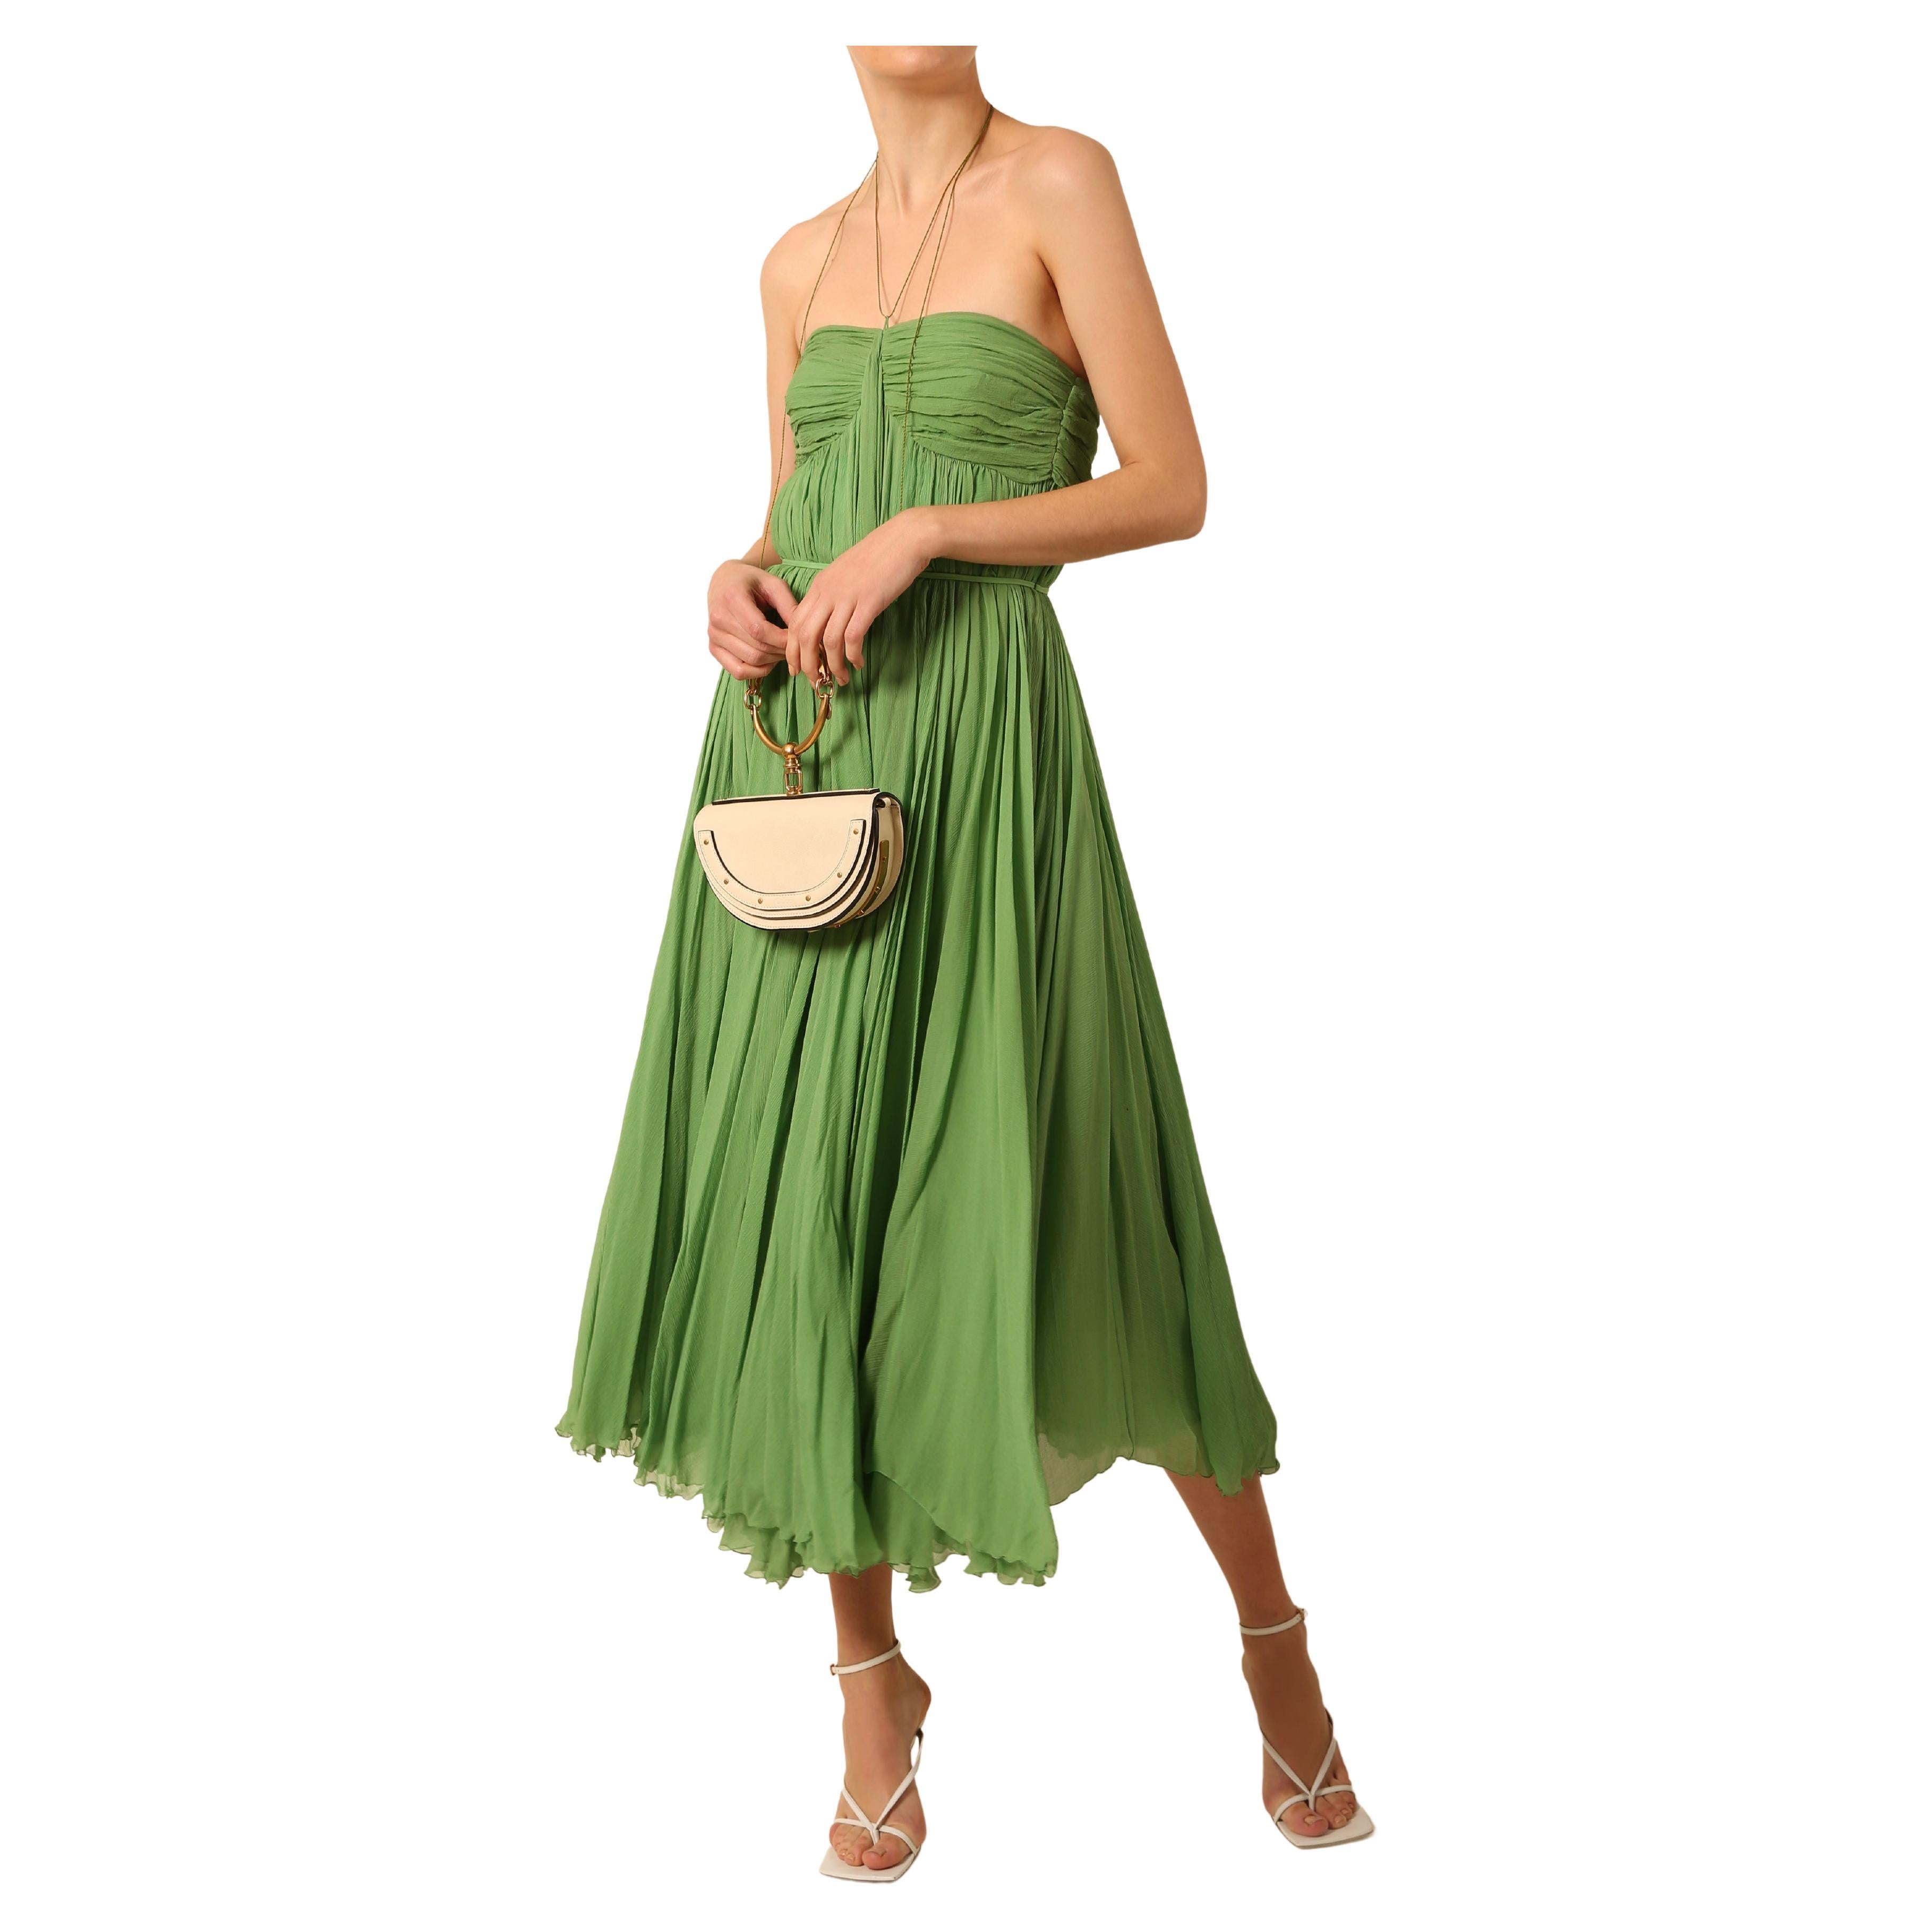 Chloe S04 strapless plisse green silk chiffon layered bustier midi length dress 